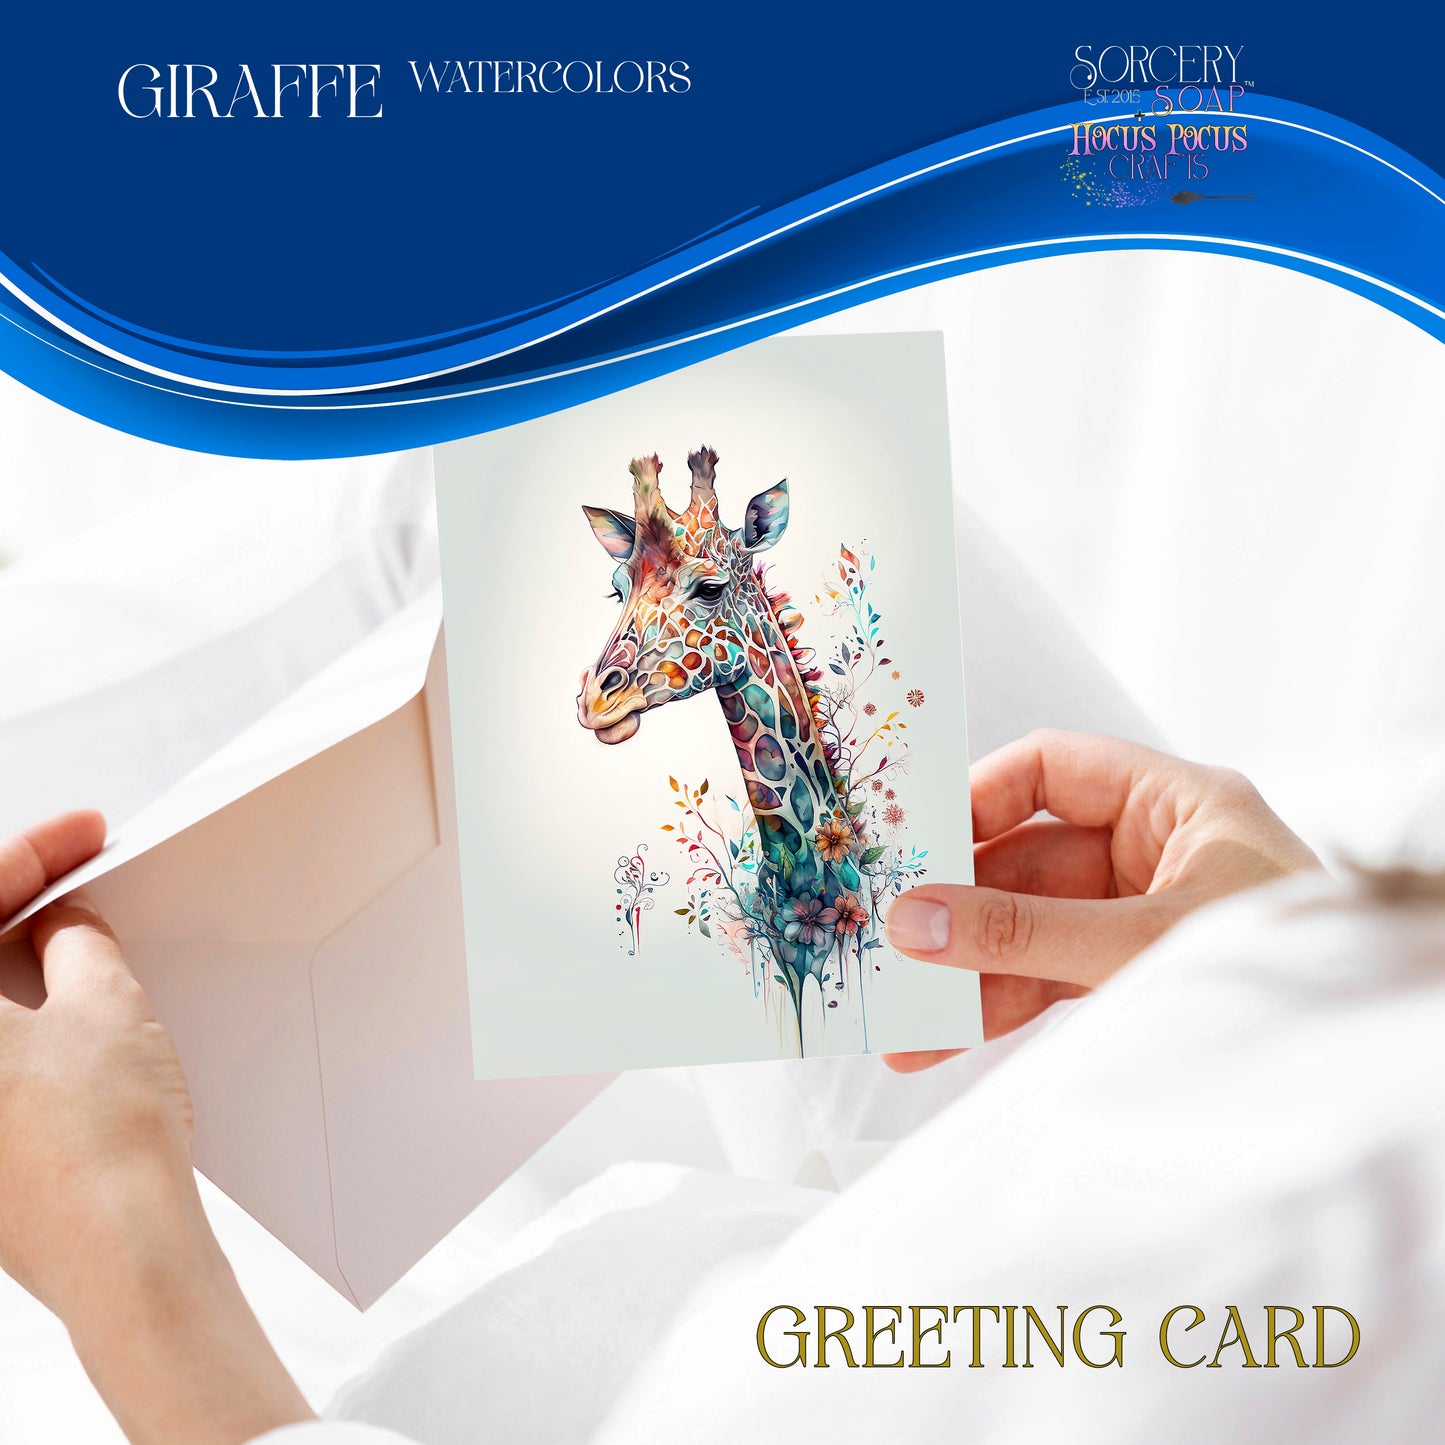 Giraffe Watercolors Greeting Card